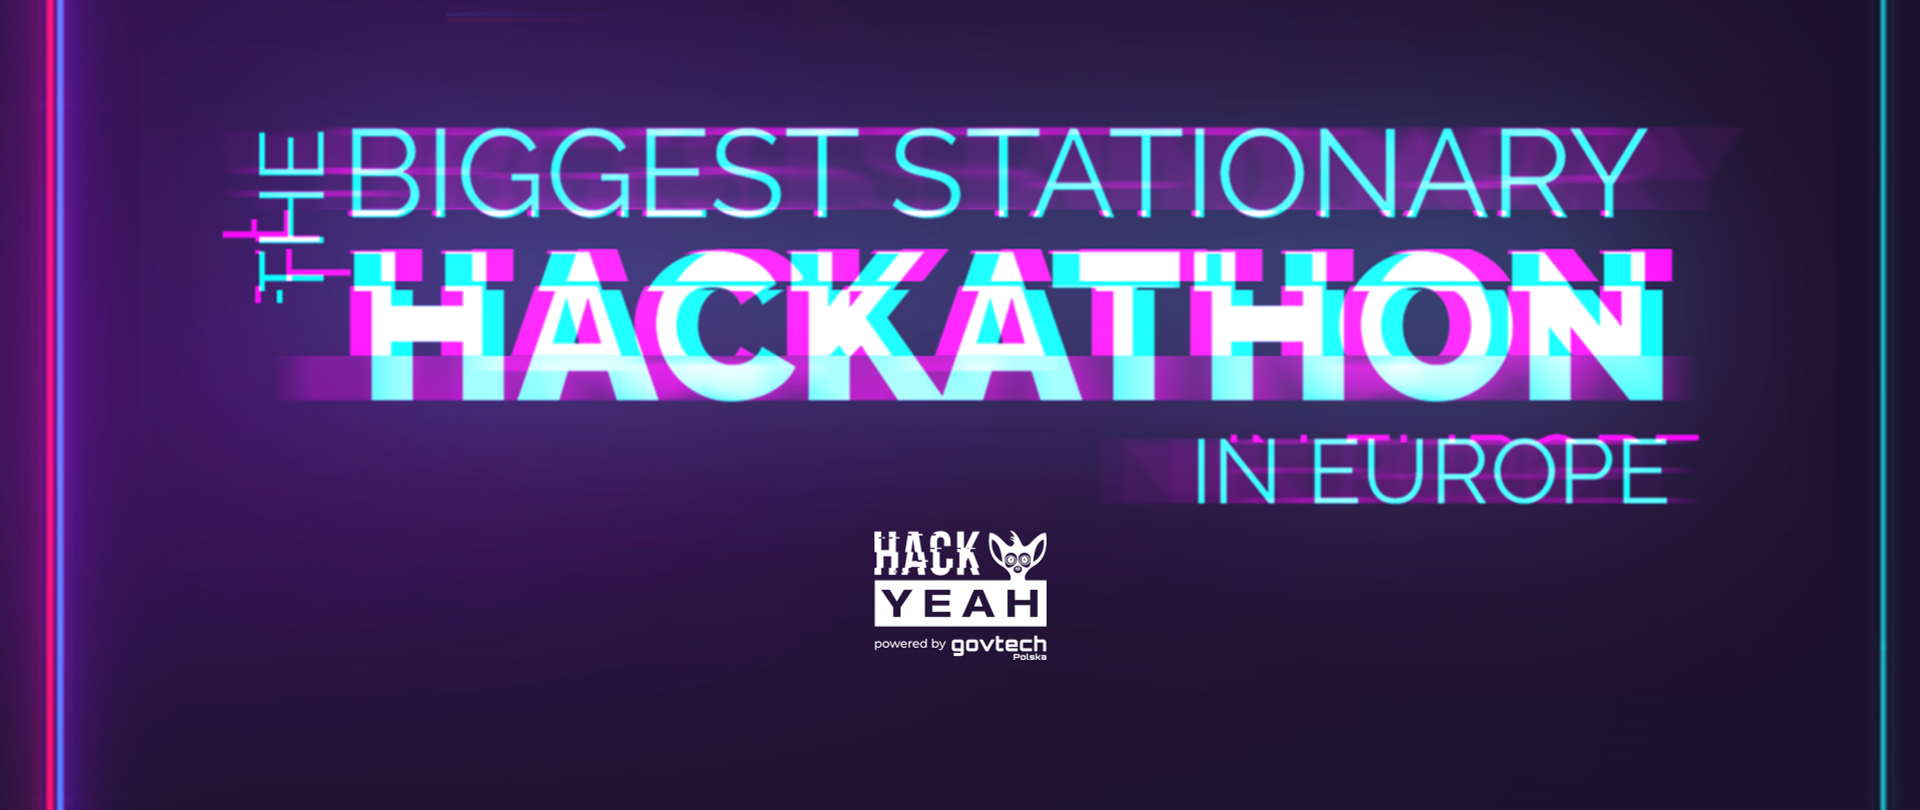 The biggesrt stationary hackathon in Europe, HackYeah powered GovTech Polska